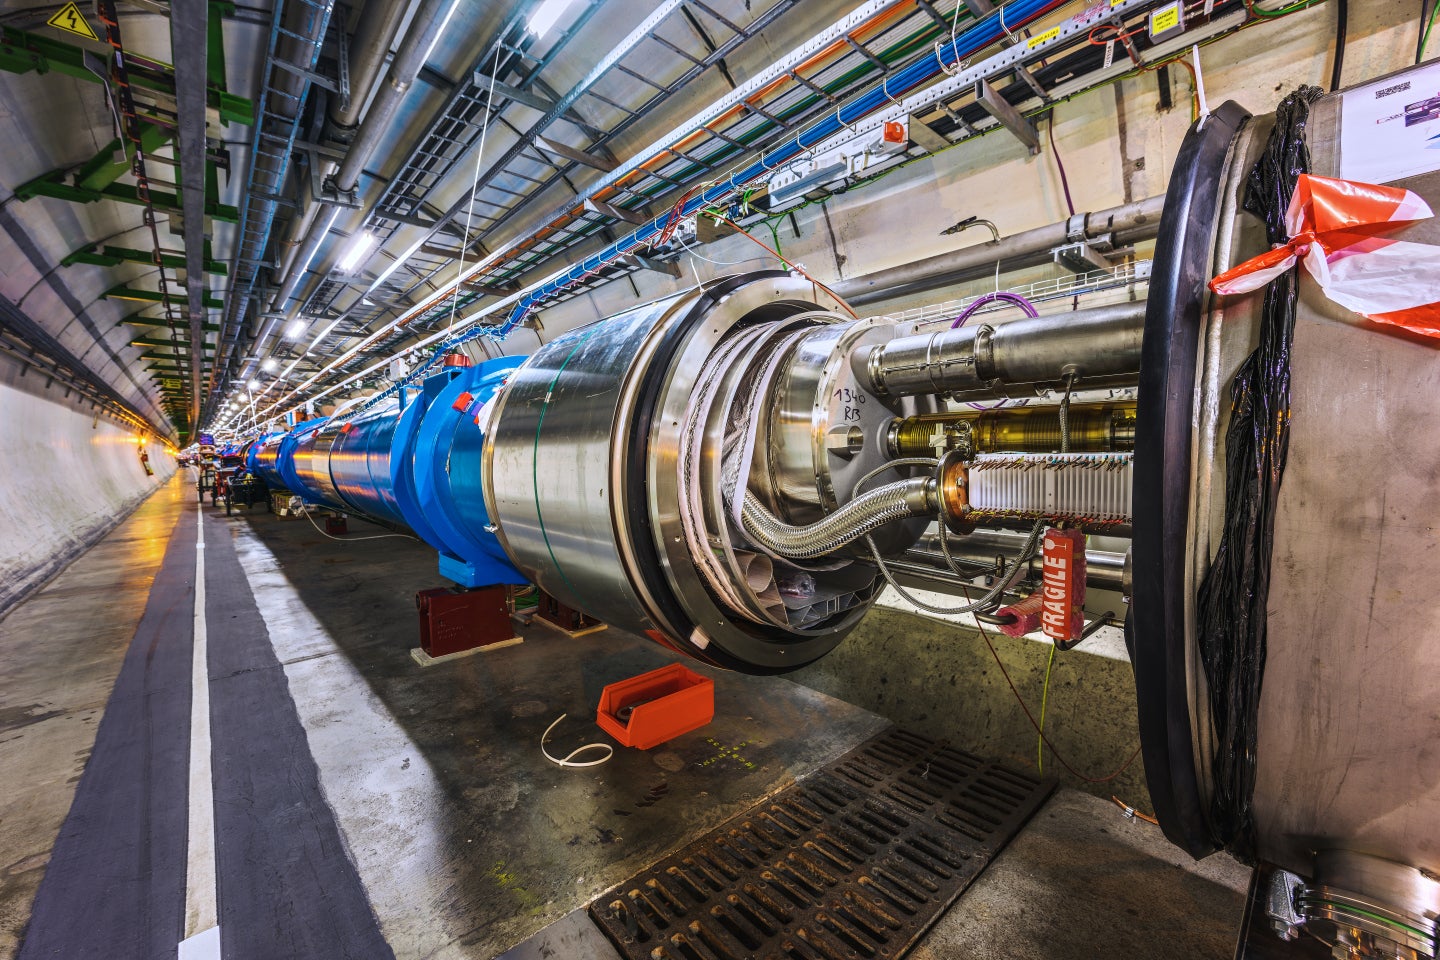 The LHC tunnel (Maximilien Brice/CERN)